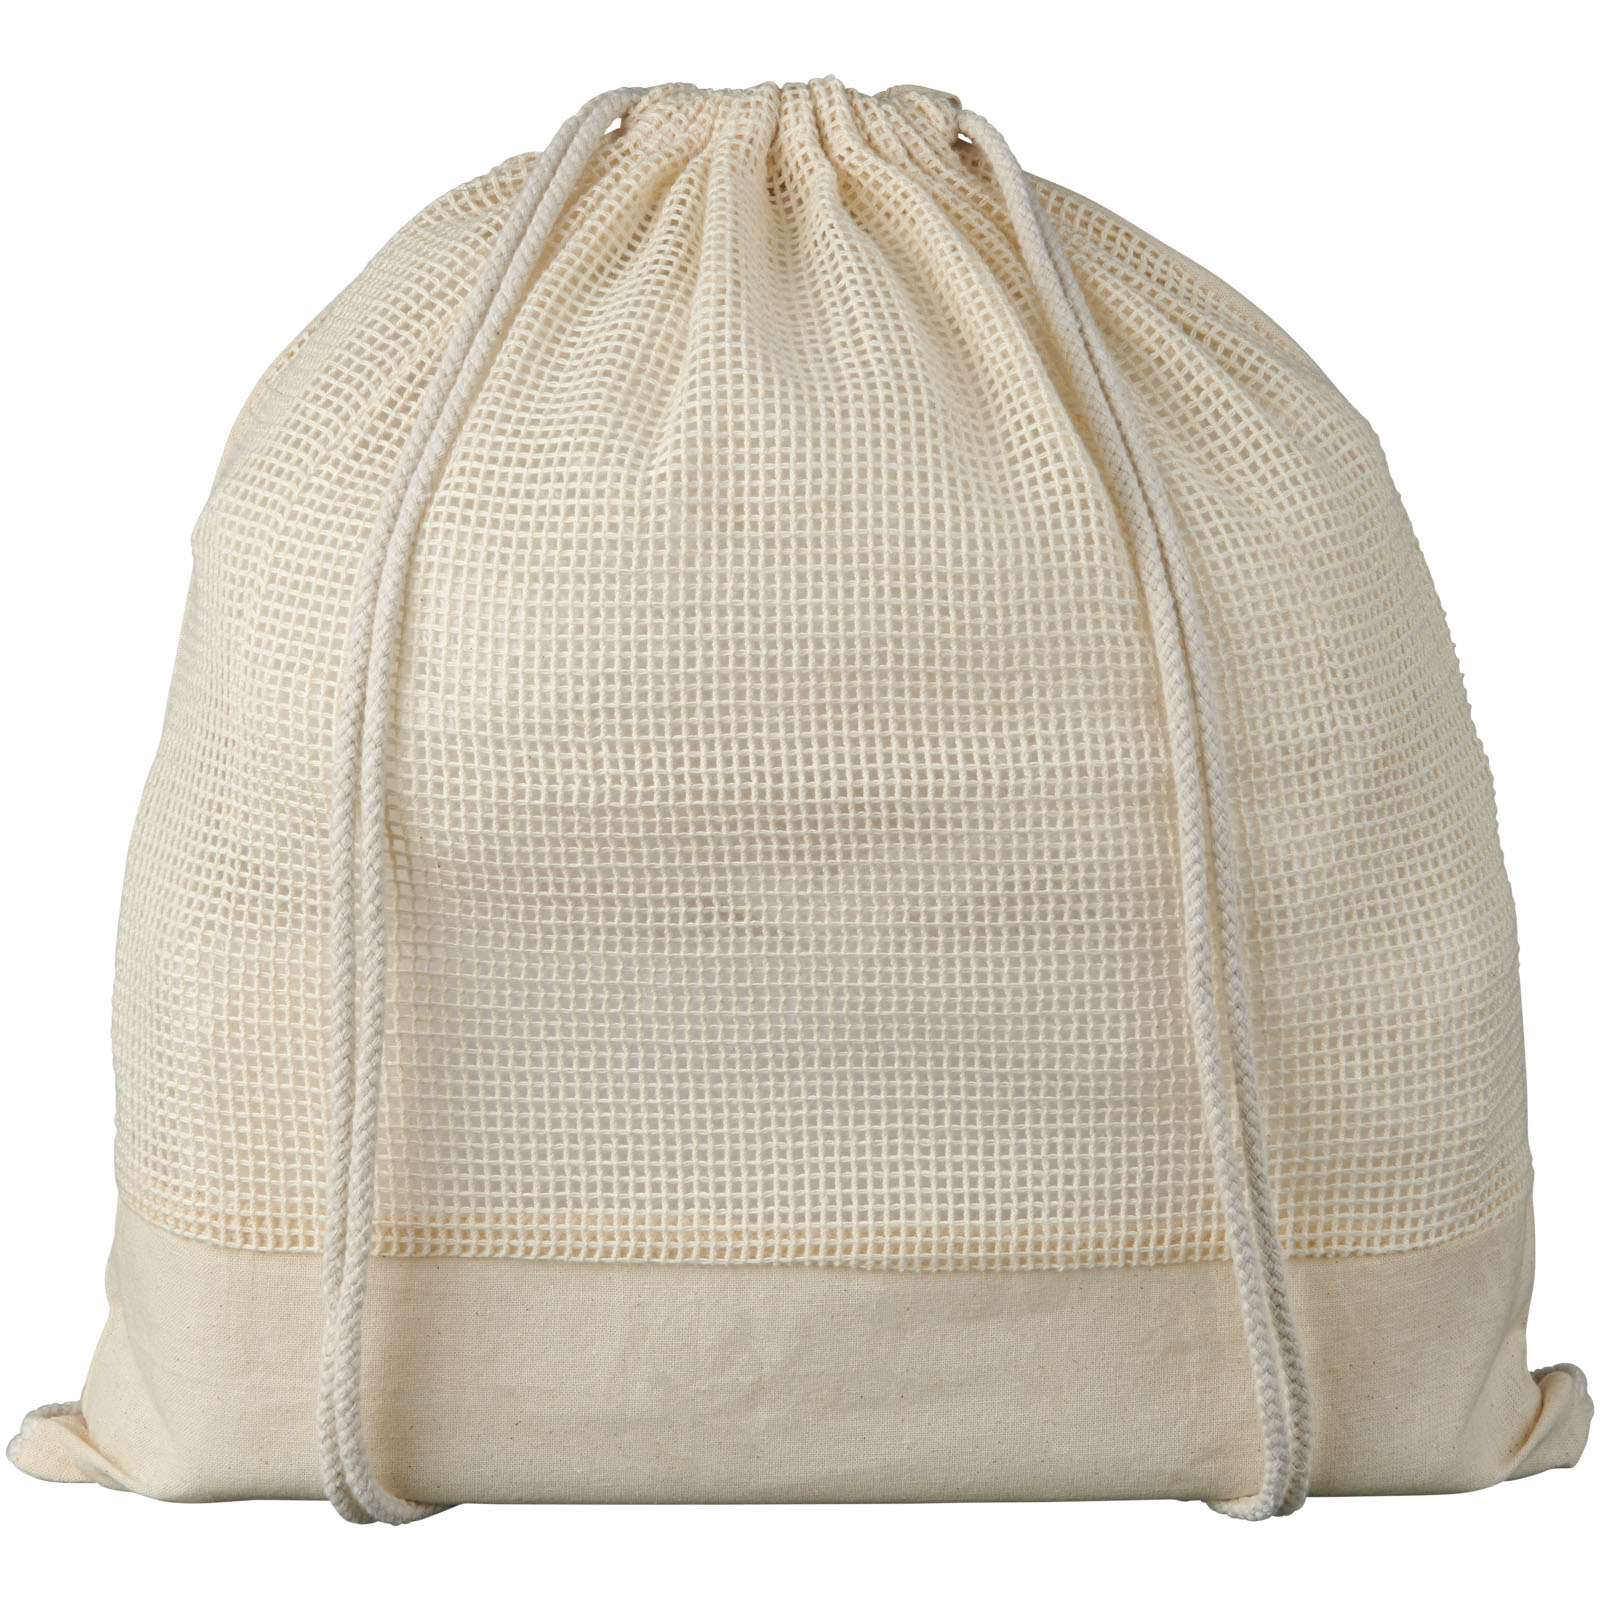 Advertising Drawstring Bags - Maine mesh cotton drawstring bag 5L - 2